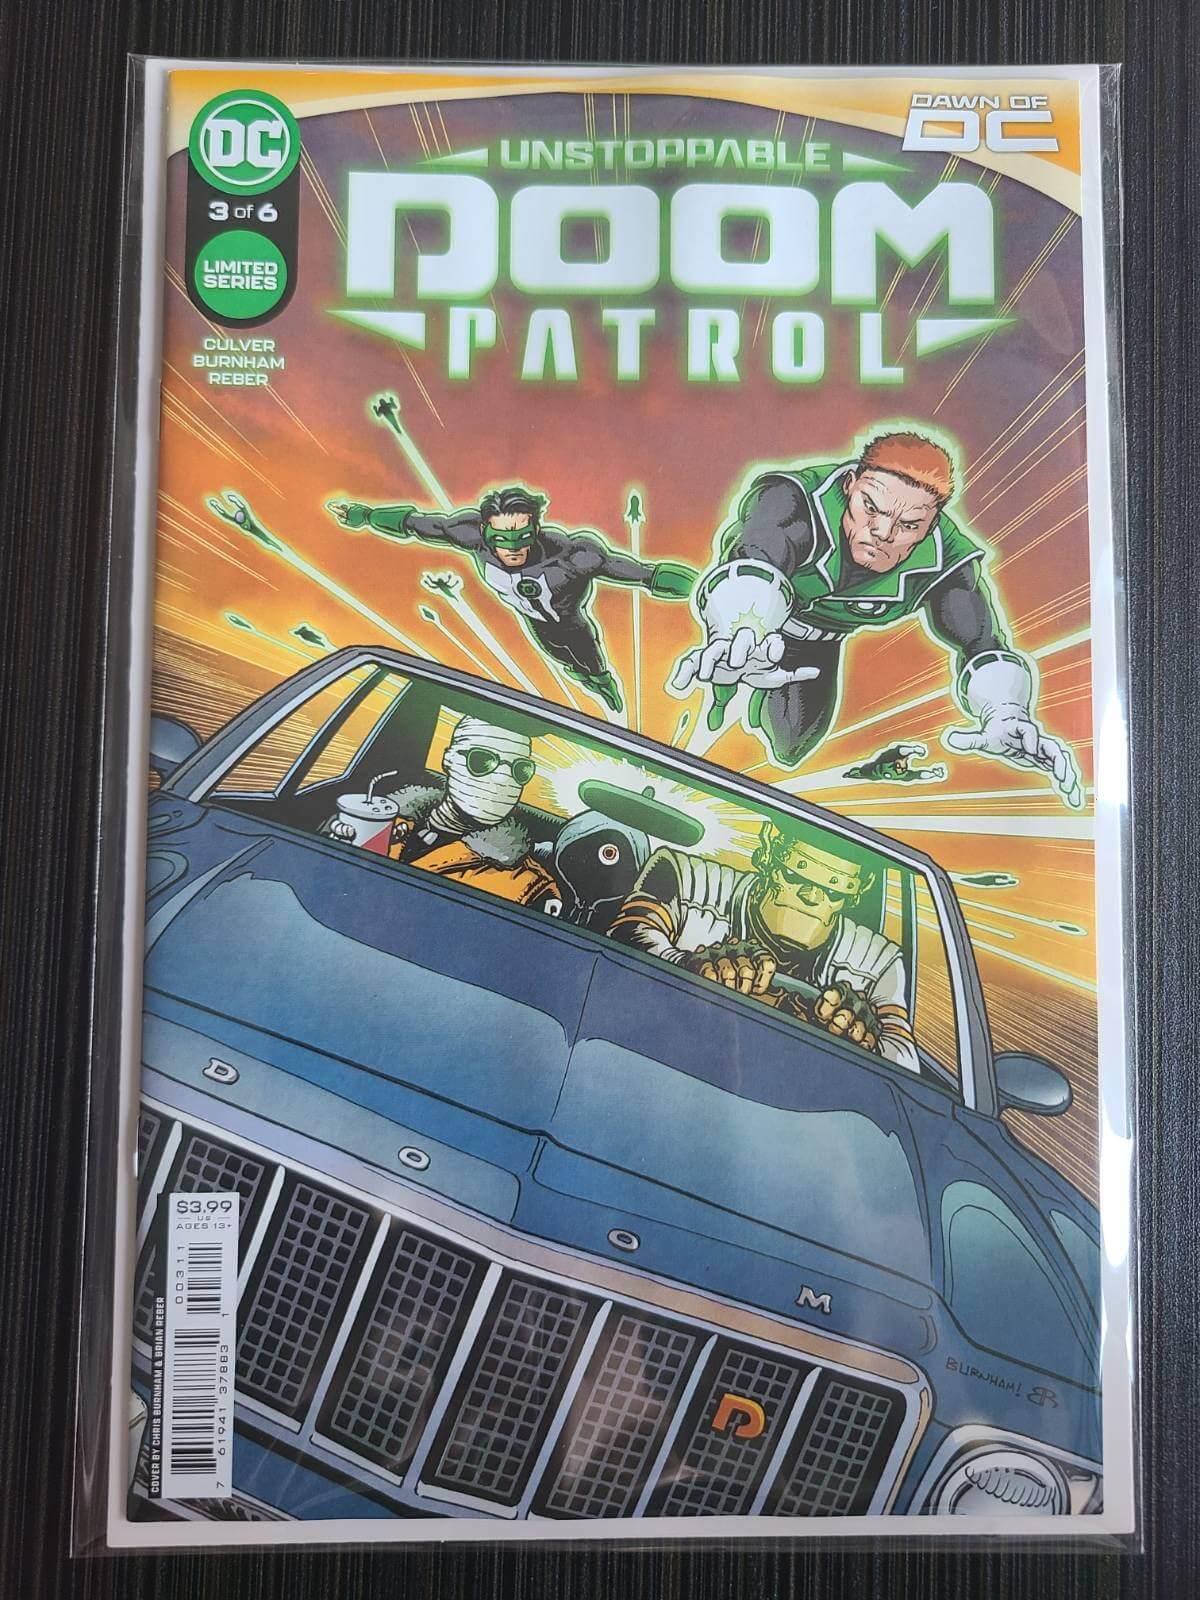 Unstoppable Doom Patrol #3 (of 6) Cover A Chris Burnham